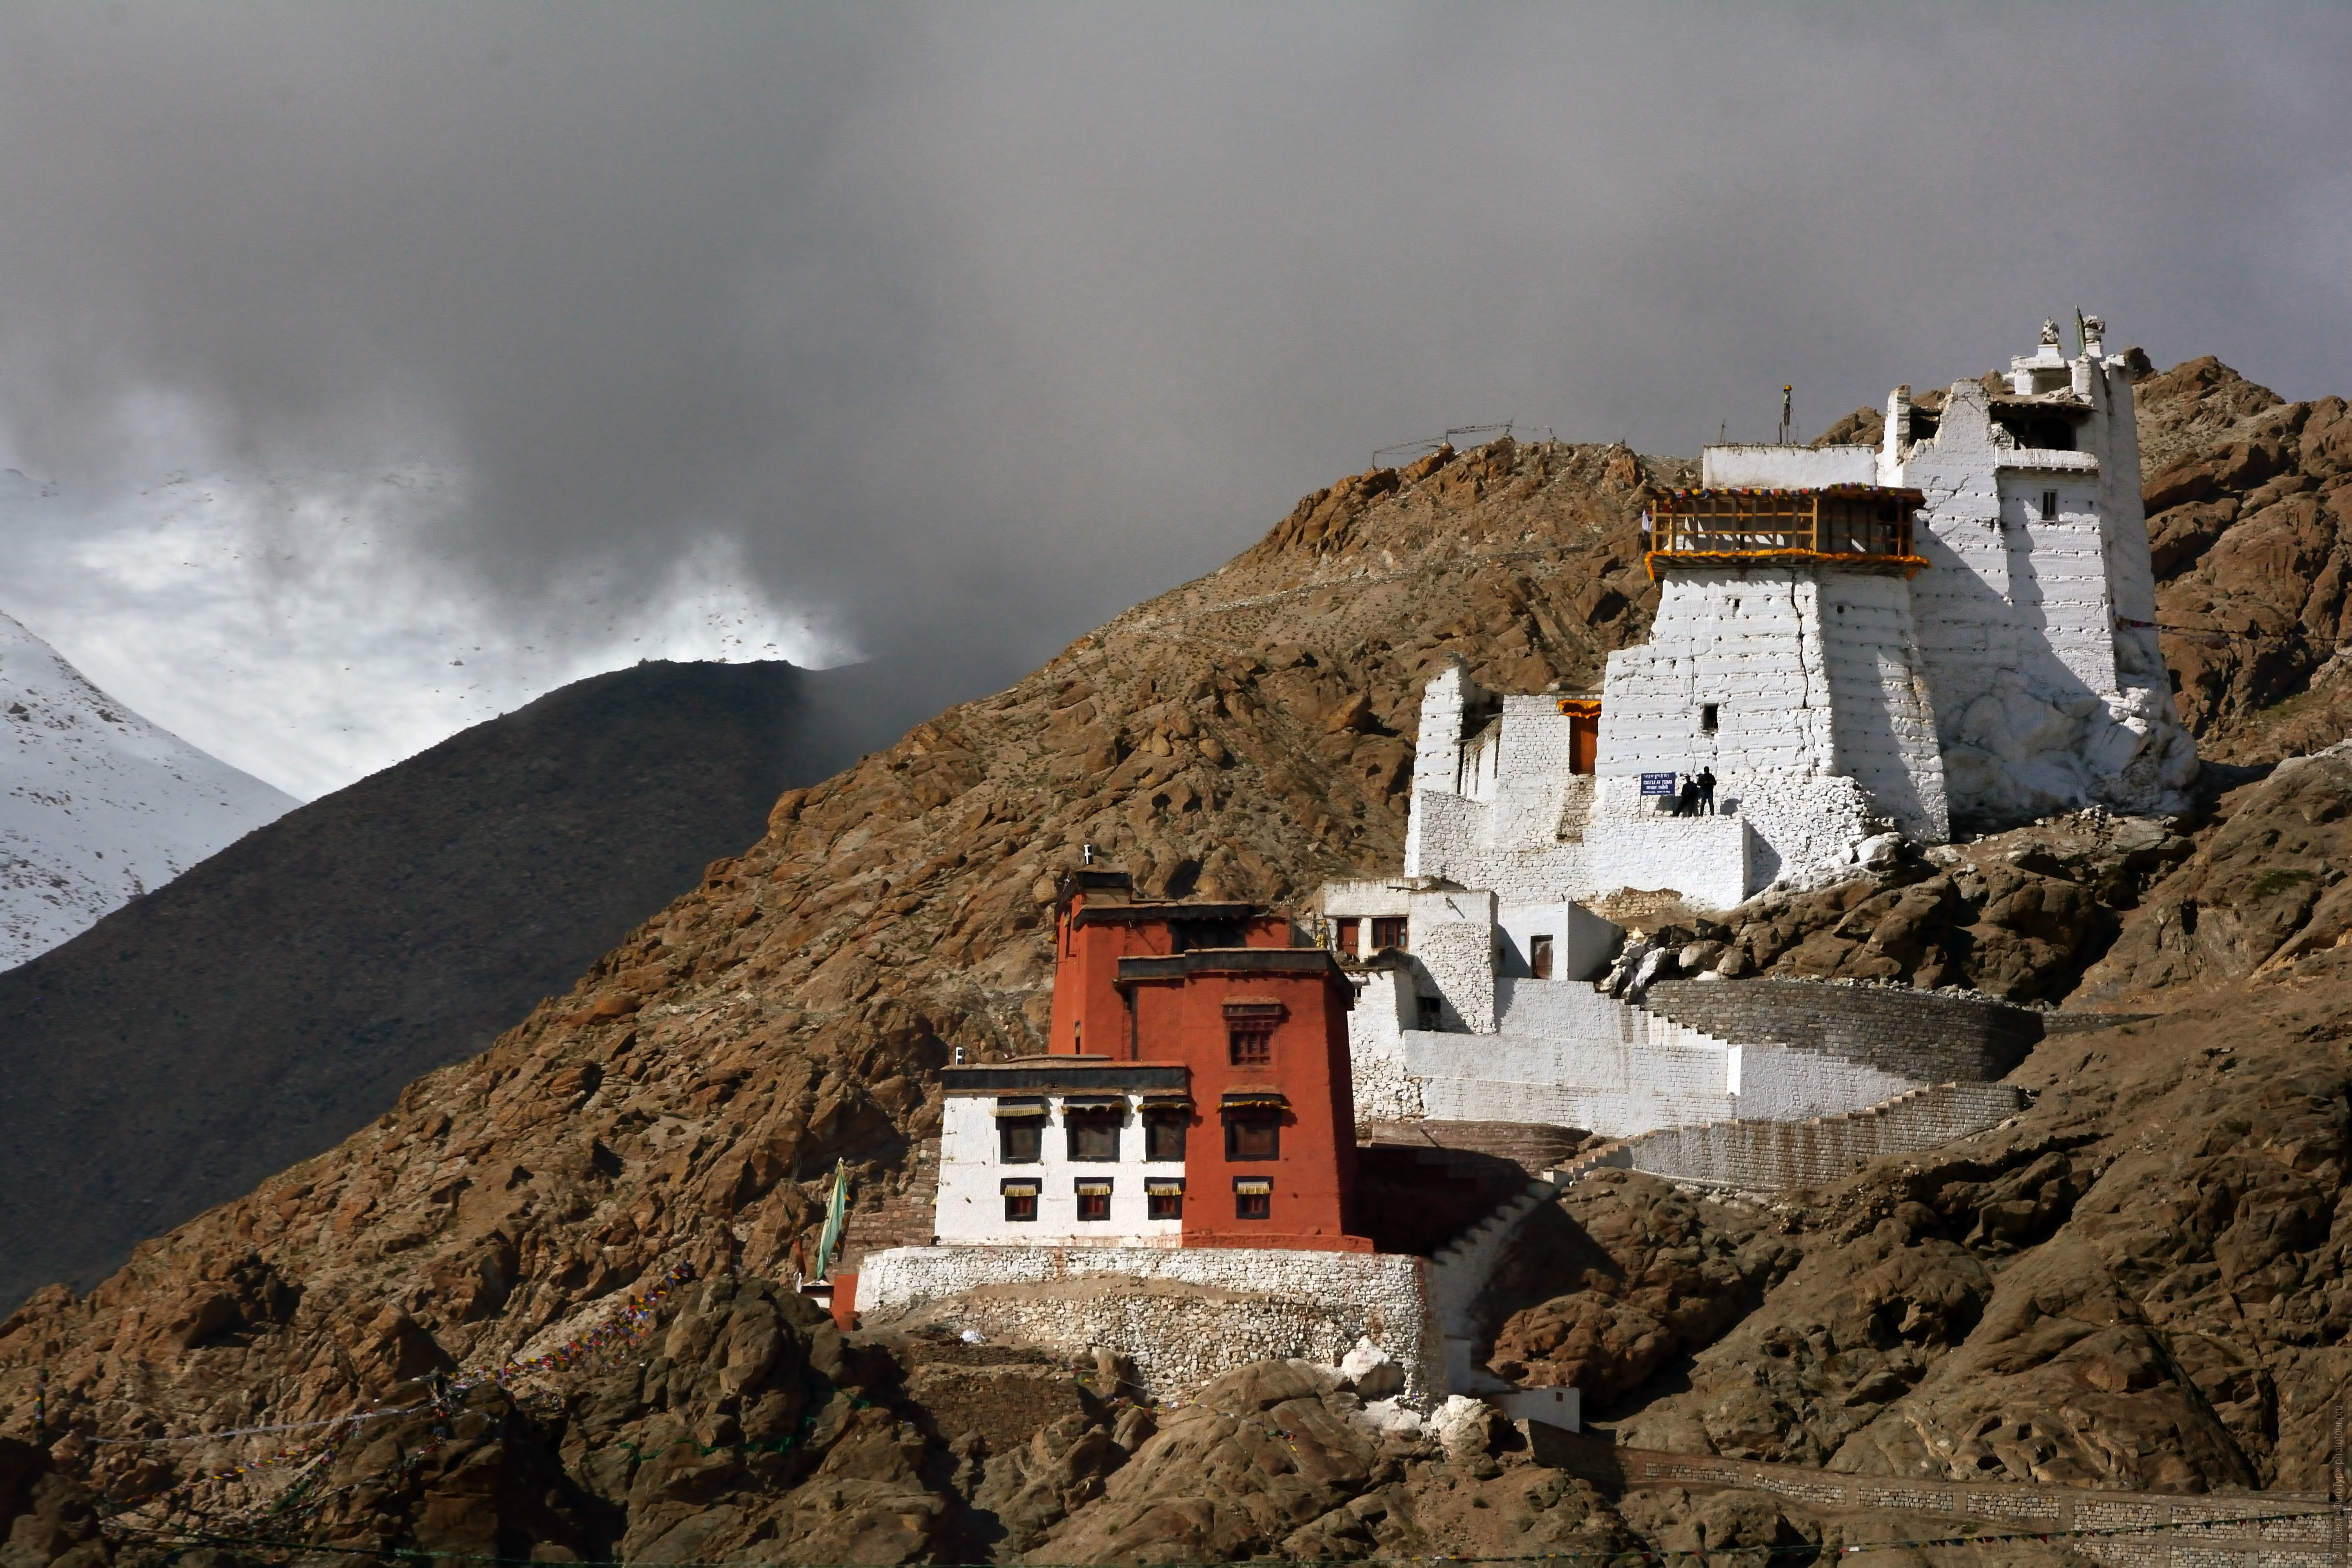 Буддийский монастырь Намгьял Цемо. Фототур по Гималаям, ноябрь 2016 года.